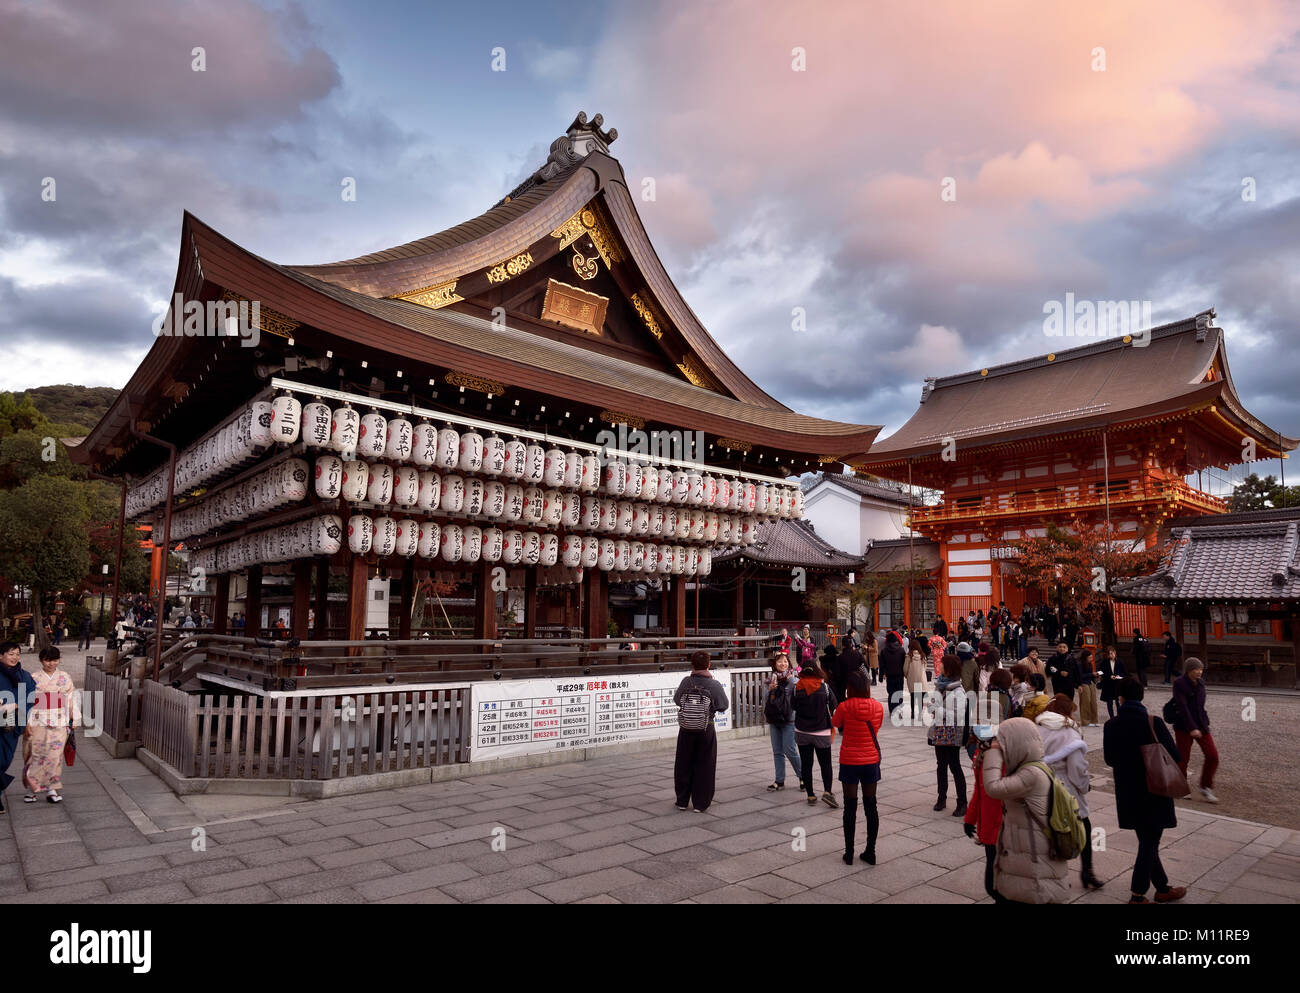 Yasaka shrine, Yasaka-jinja main stage in autumn sunset, Japanese Shinto shrine in Gion district, Kyoto, Japan 2017 Stock Photo